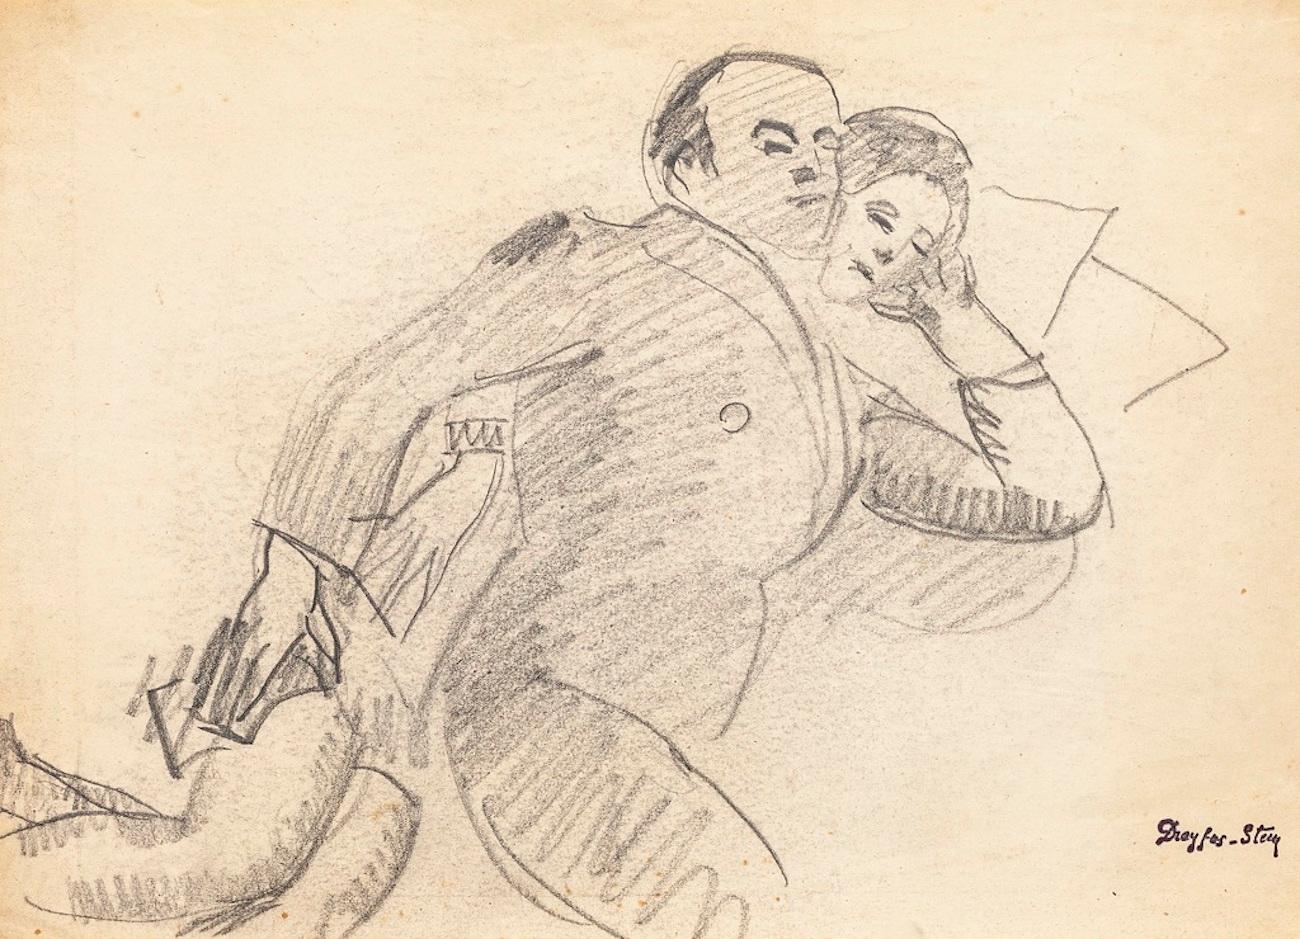 Jean Dreyfus-Stern Interior Art - Sleeping Couple - Pencil  Drawing by J. Dreyfus-Stern - Early 20th Century